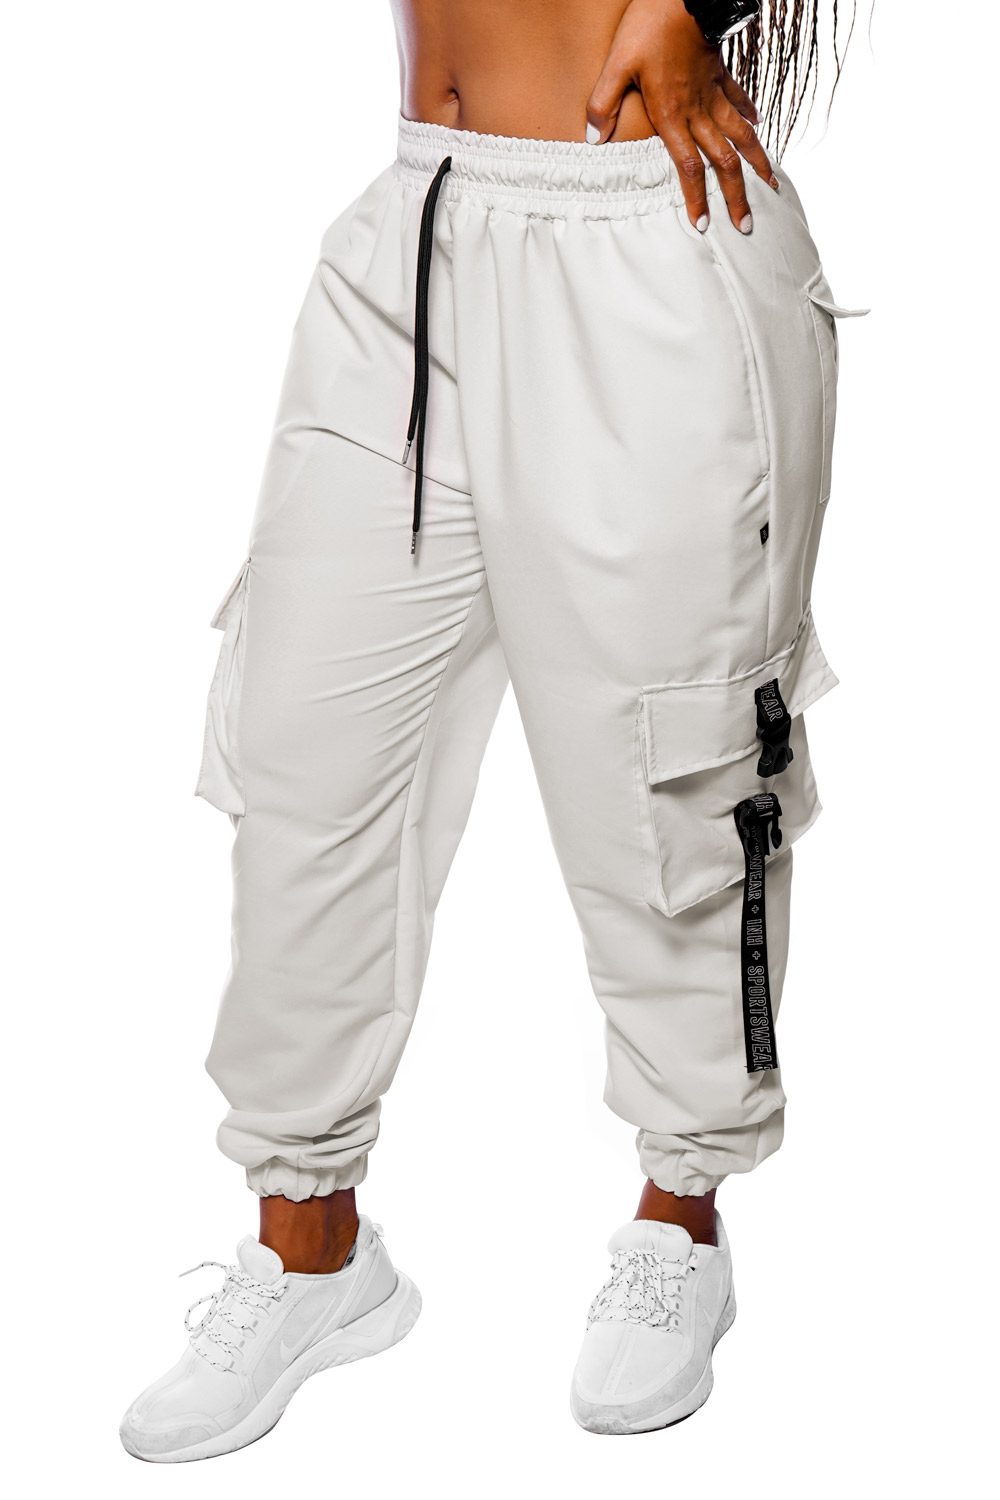 Jogger Urban Blanco - INH Sportswear